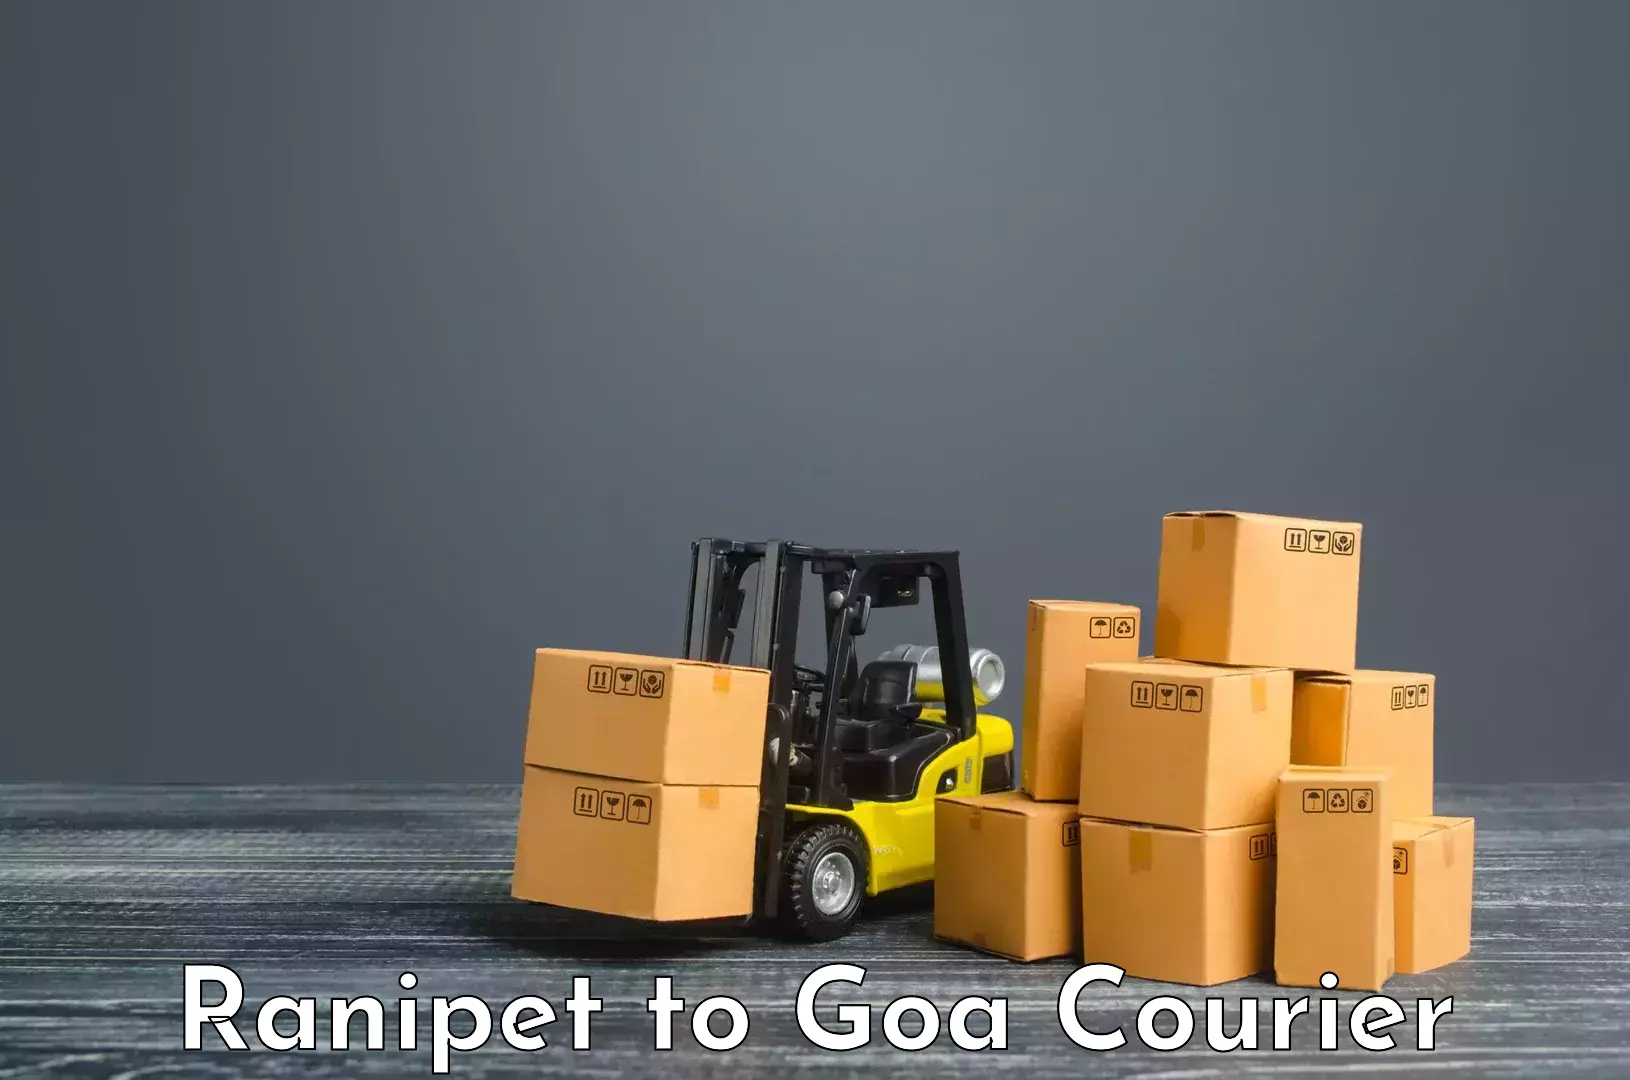 Logistics service provider Ranipet to IIT Goa